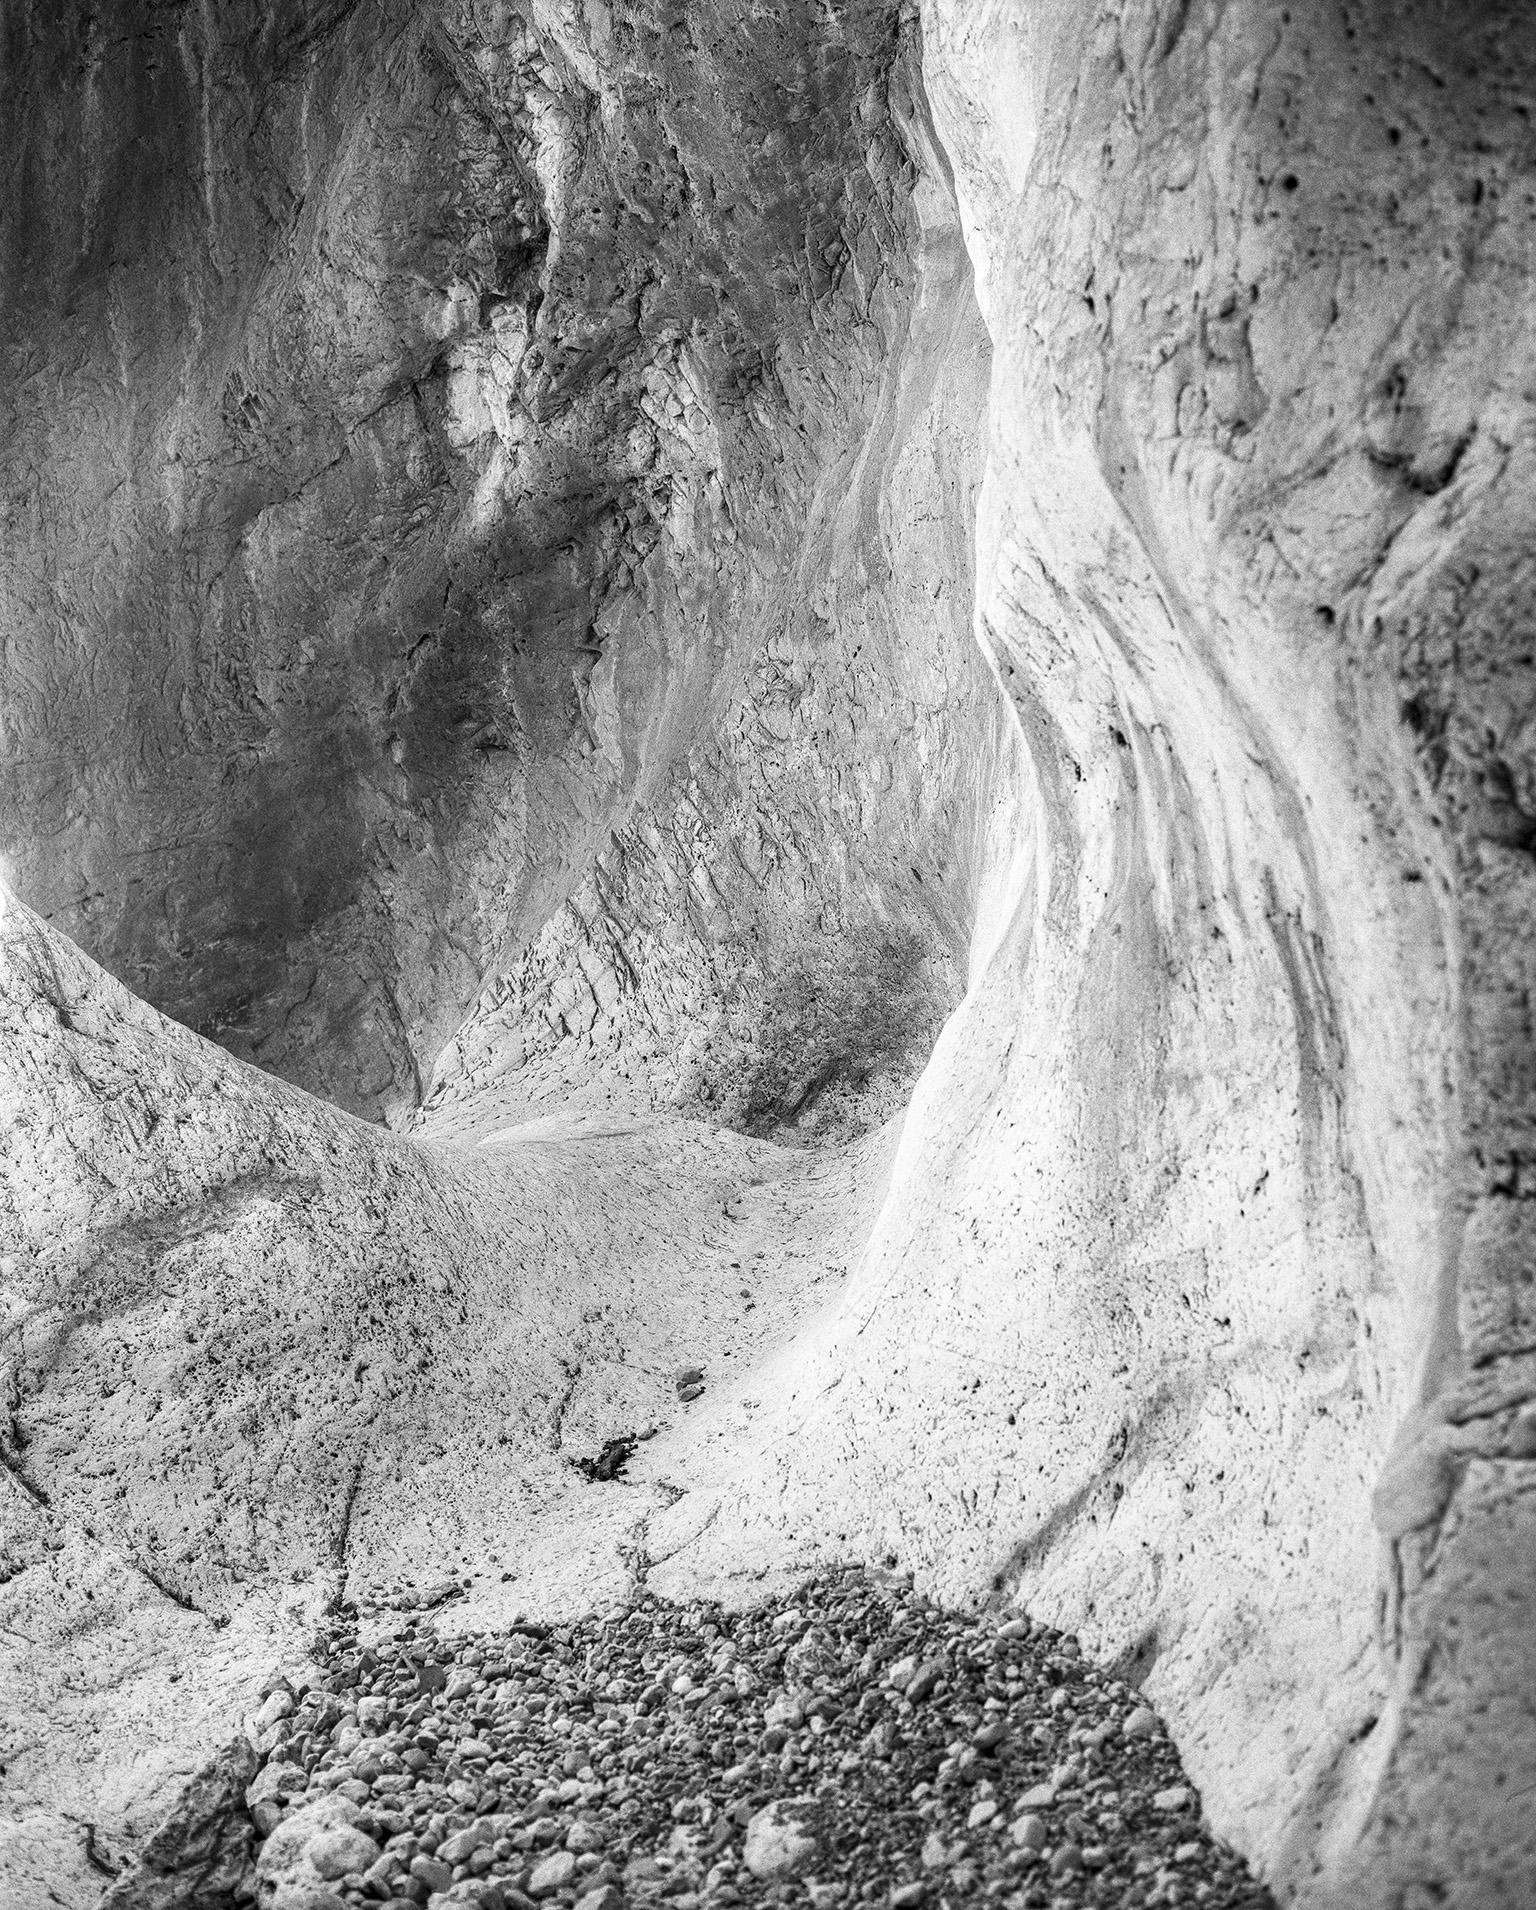 John Stathatos Landscape Photograph - Earth VIII - Black and White Photograph, Stone Cave, Rocks, Natural Landscape